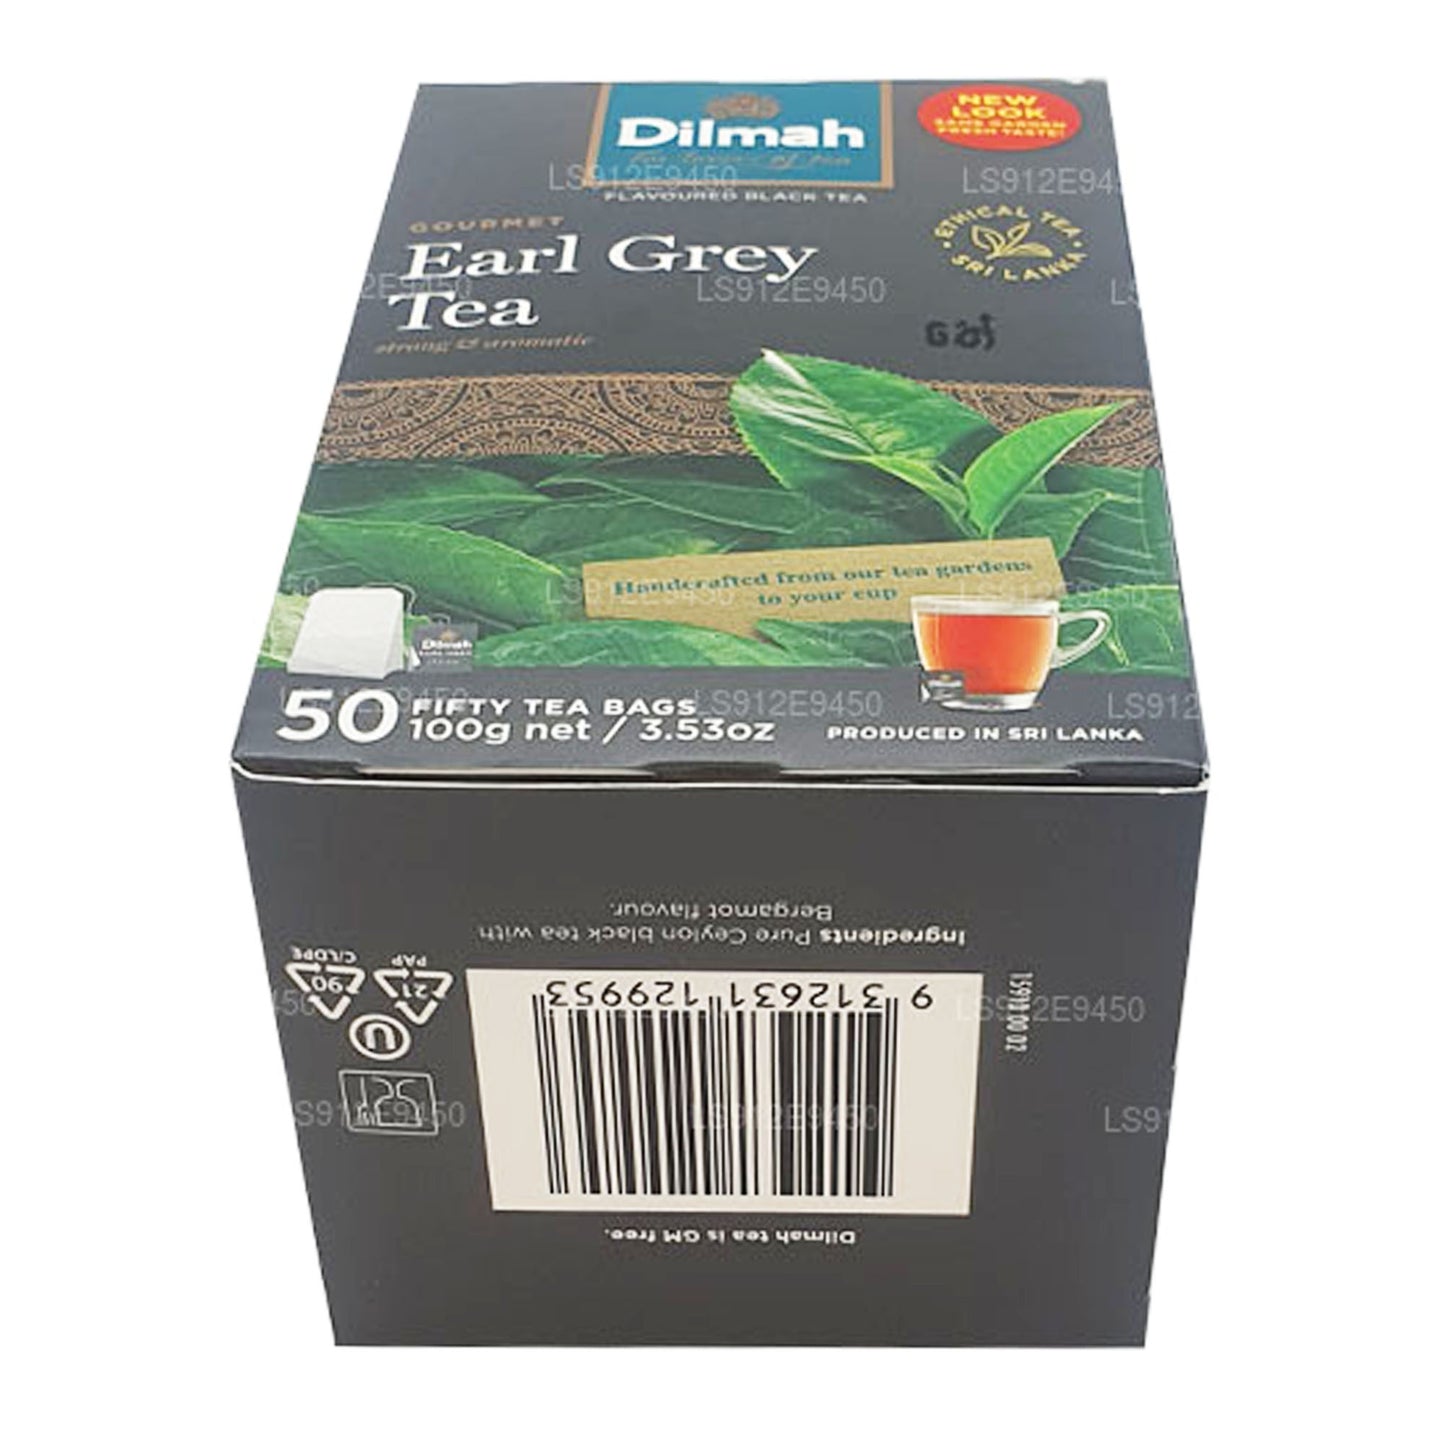 Dilmah Earl Grey Tea (100g) 50 Tea Bags